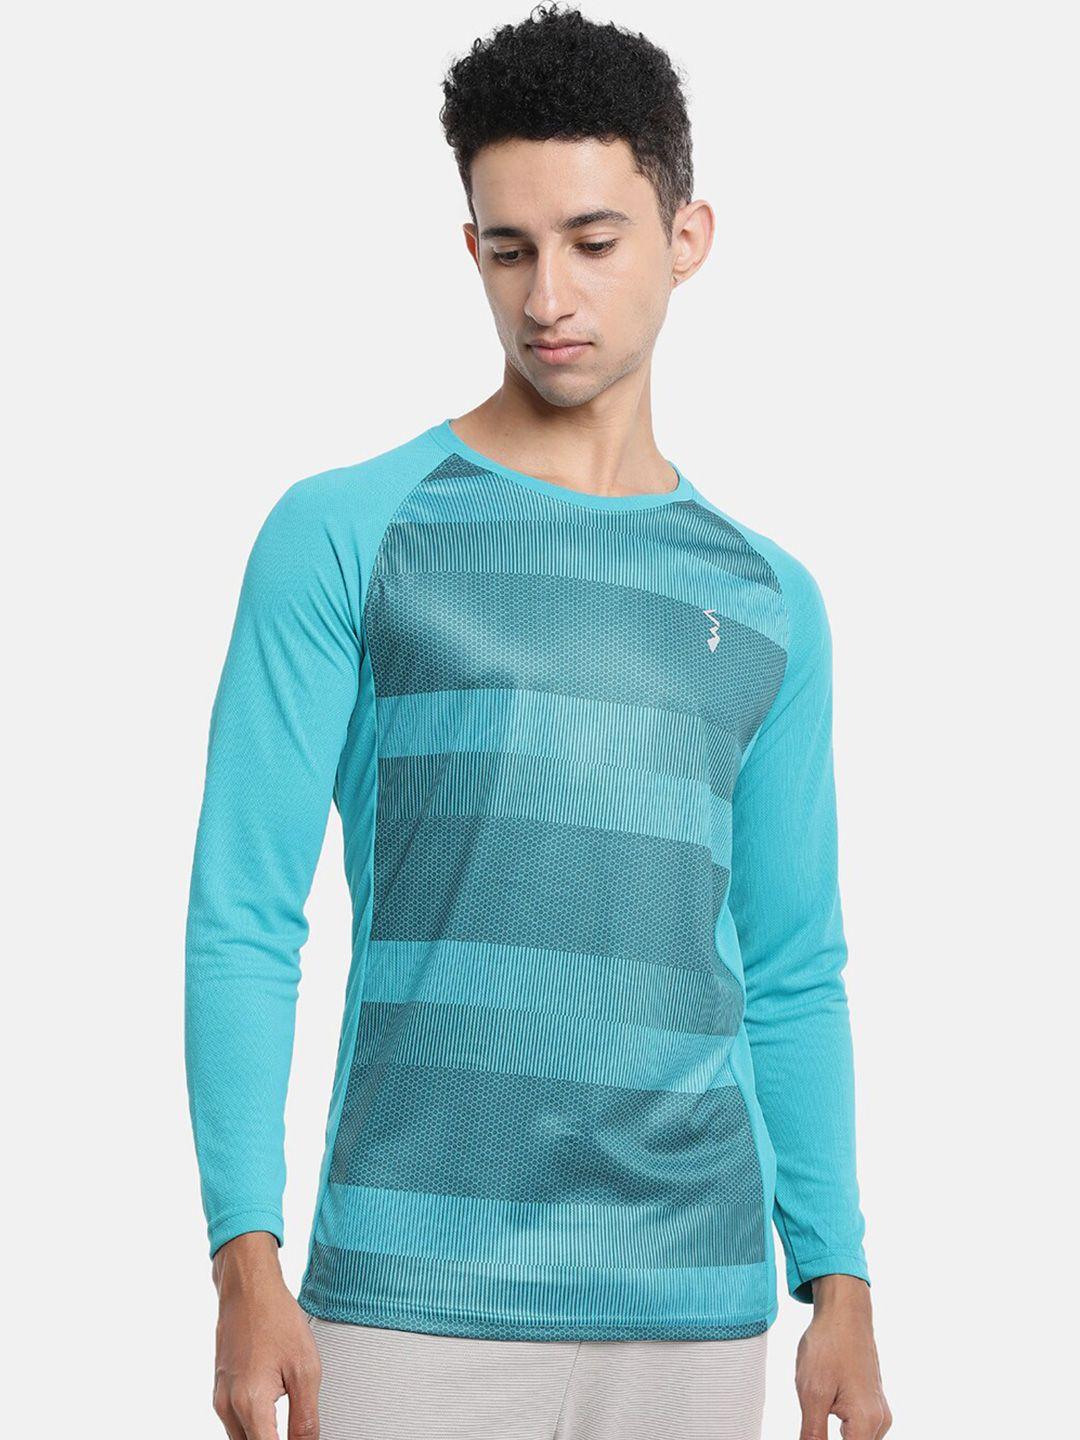 campus sutra men blue striped regular fit outdoor t-shirt